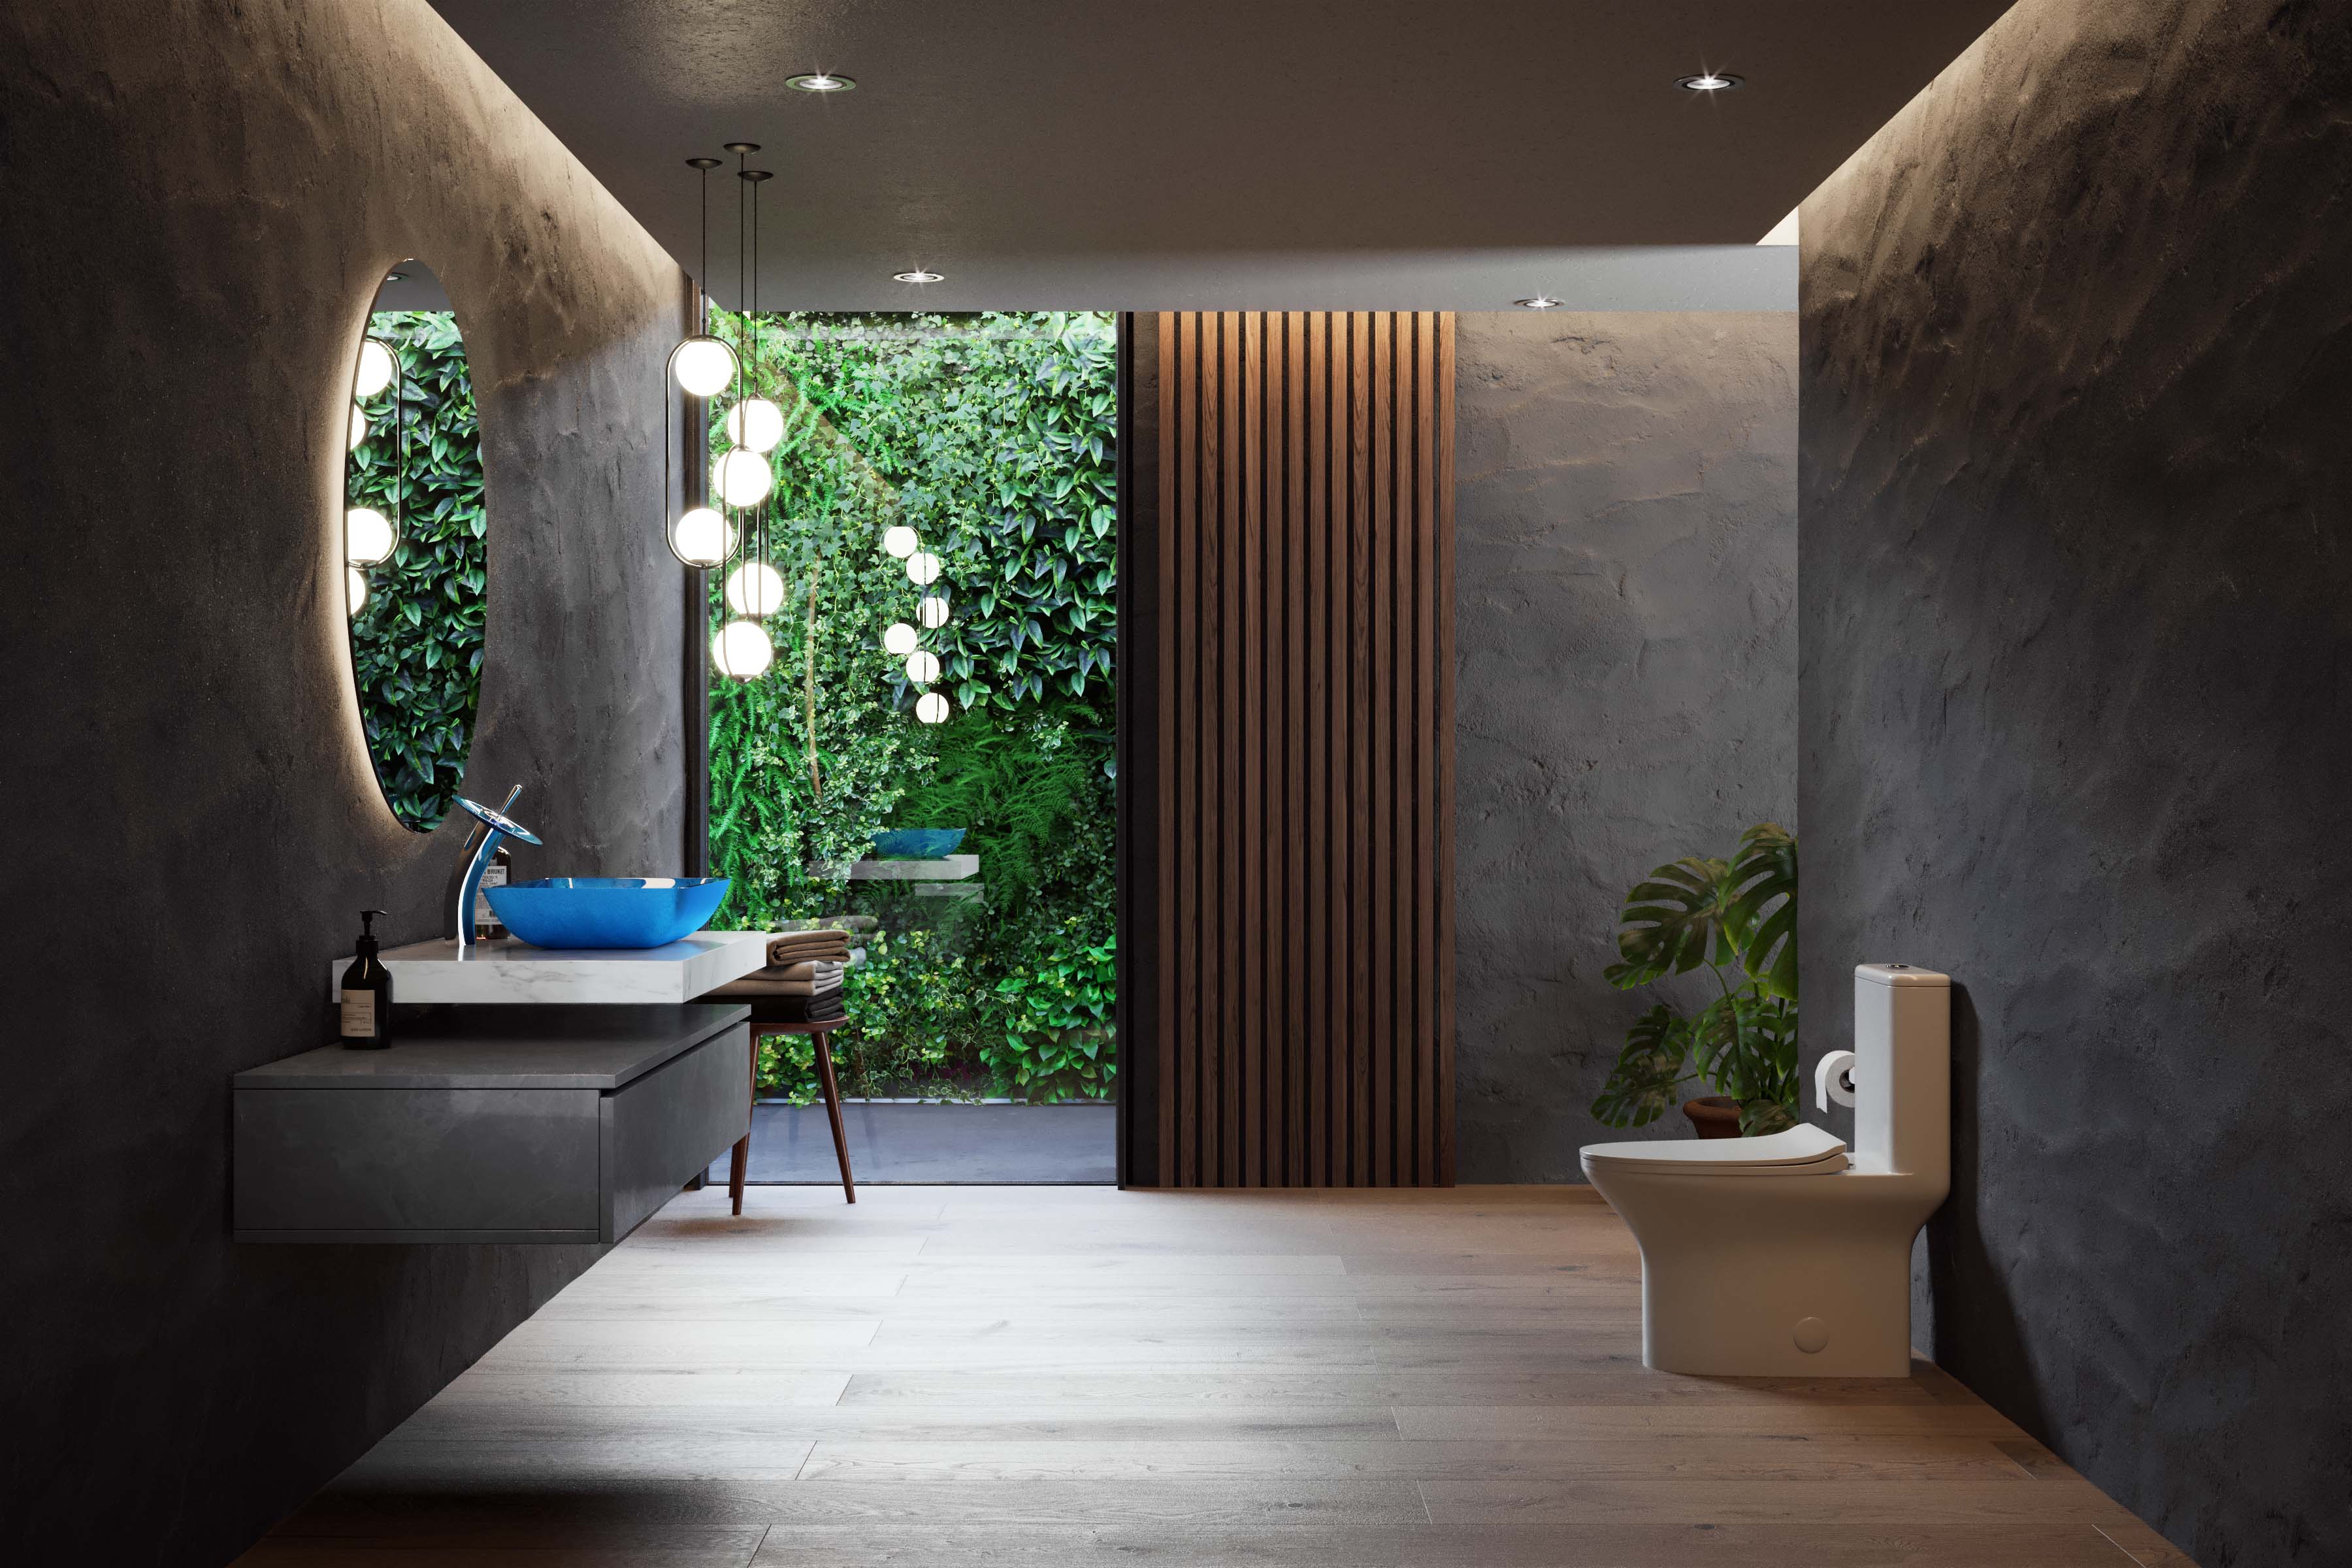 cgi visualization 3d rendering archviz architectural bathroom contemporary 3d corner